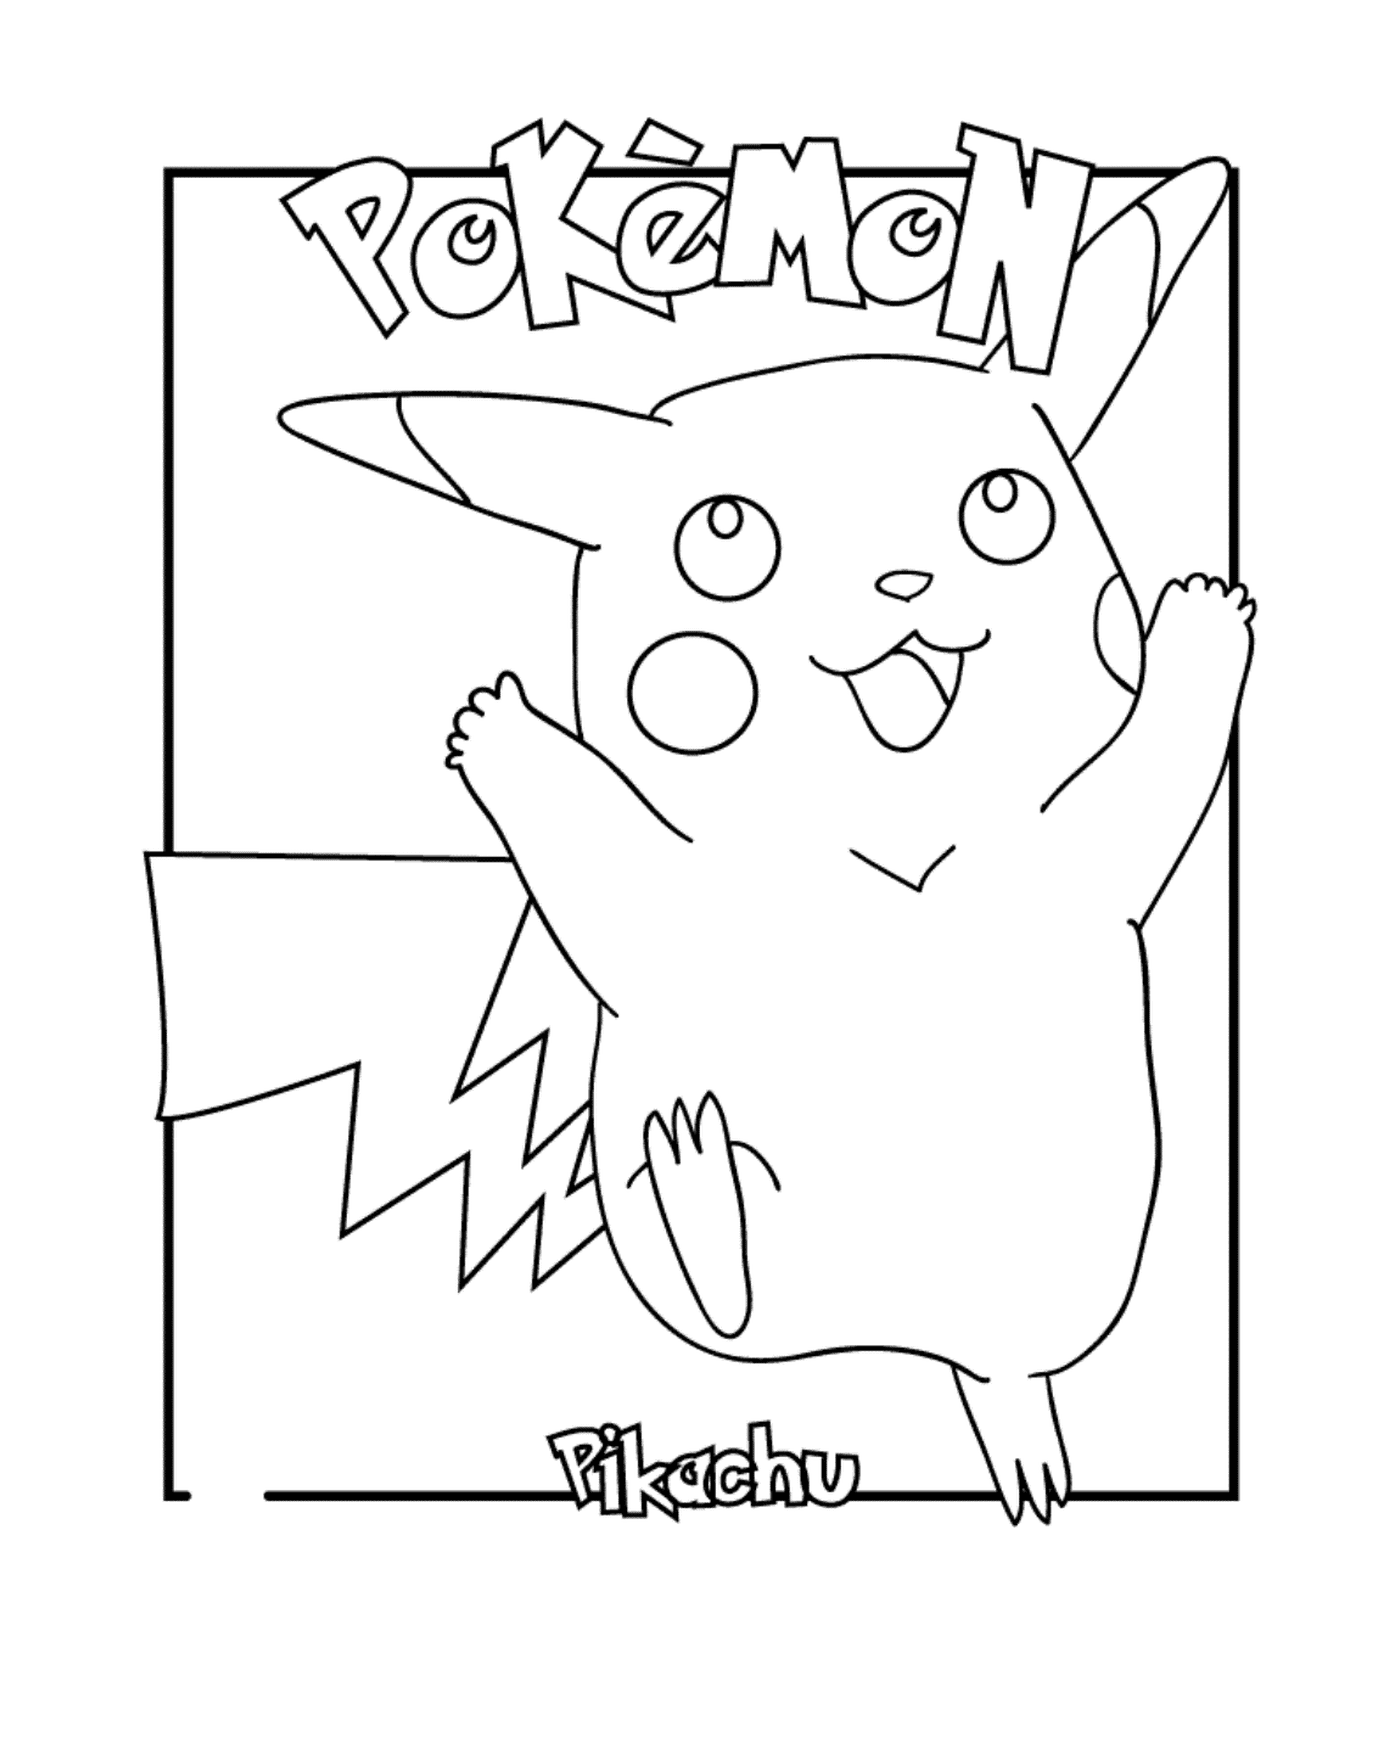  Pikachu, el amado Pokémon 